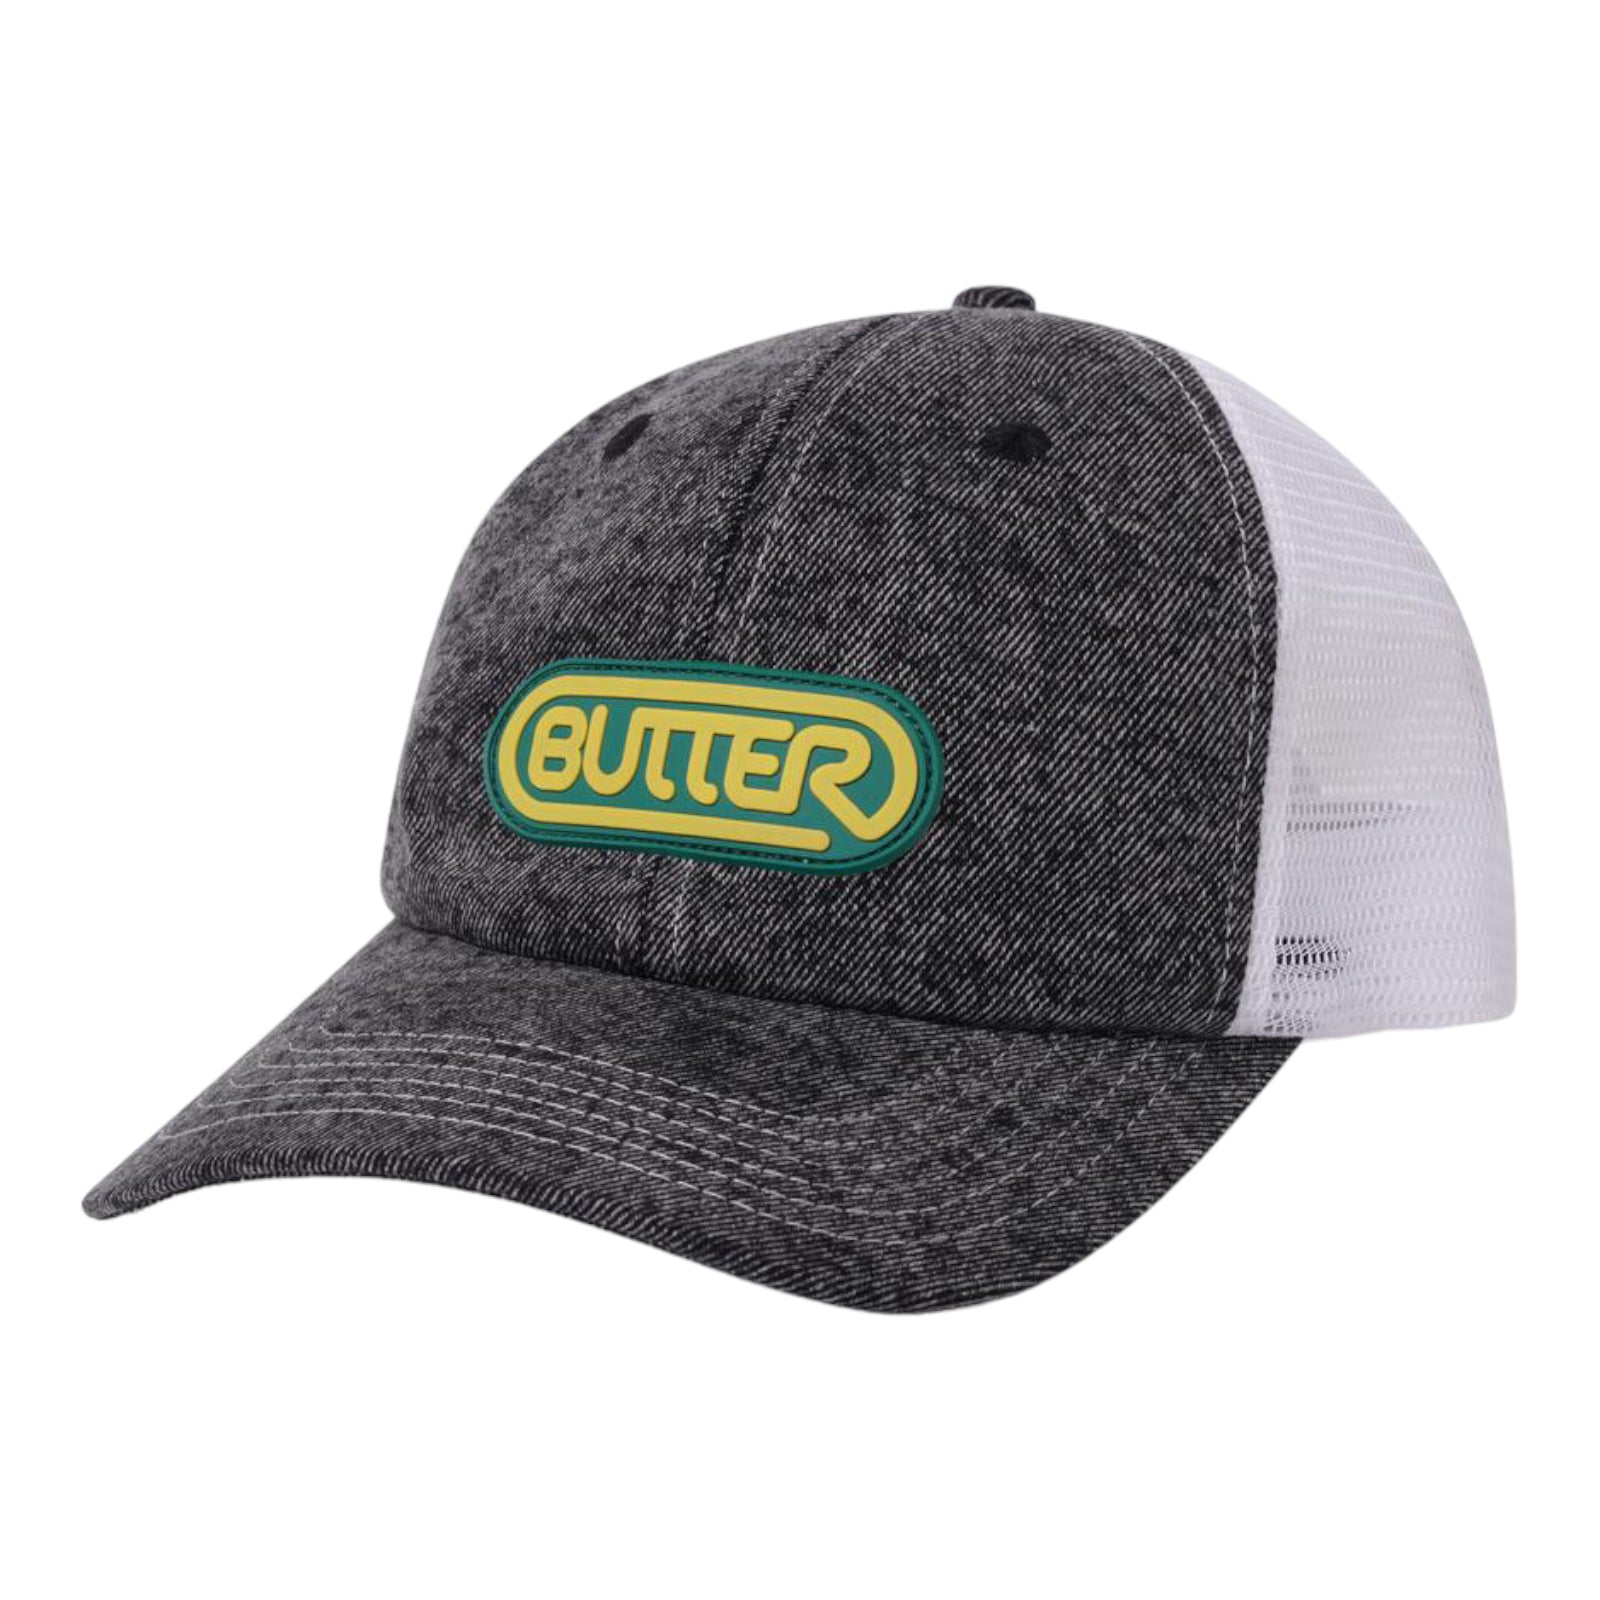 Butter Denim Trucker Hat- Gunmetal Denim